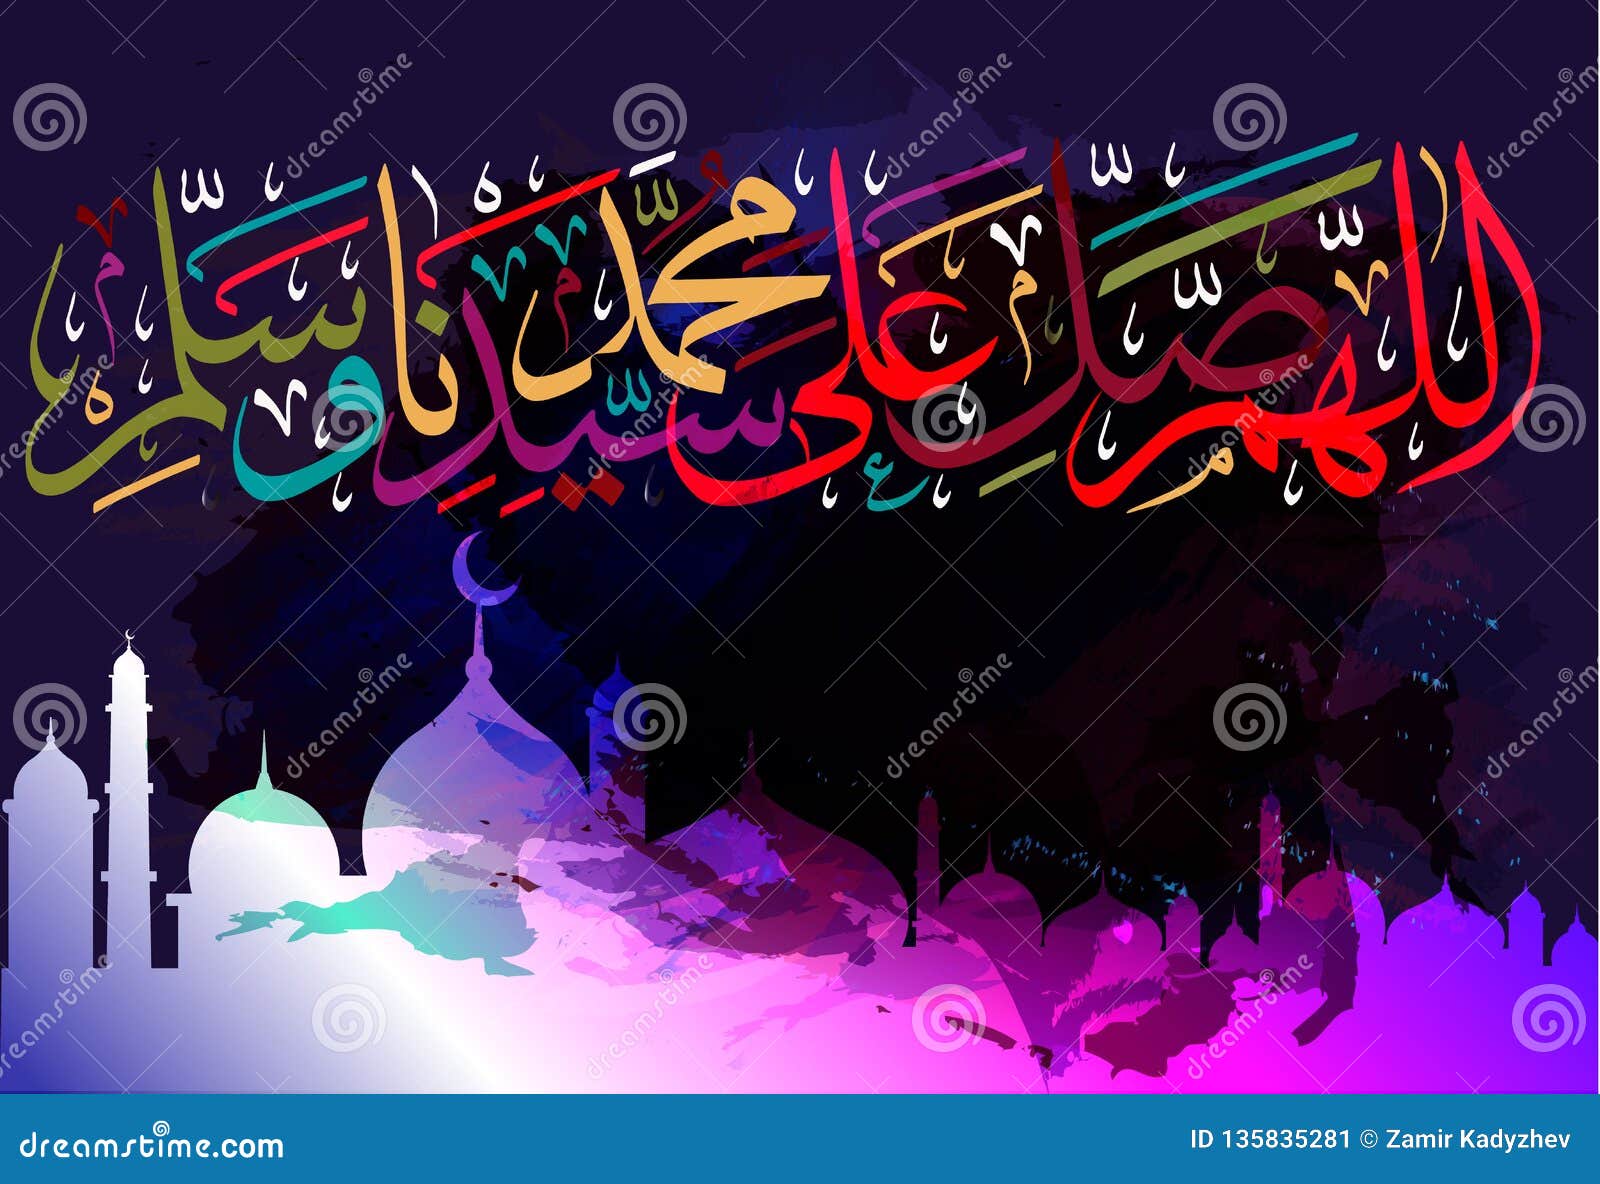 islamic calligraphy allahumma salli ala sayyidina muhammad was salim for the  of muslim holidays, ozonchaet: o allah! prais